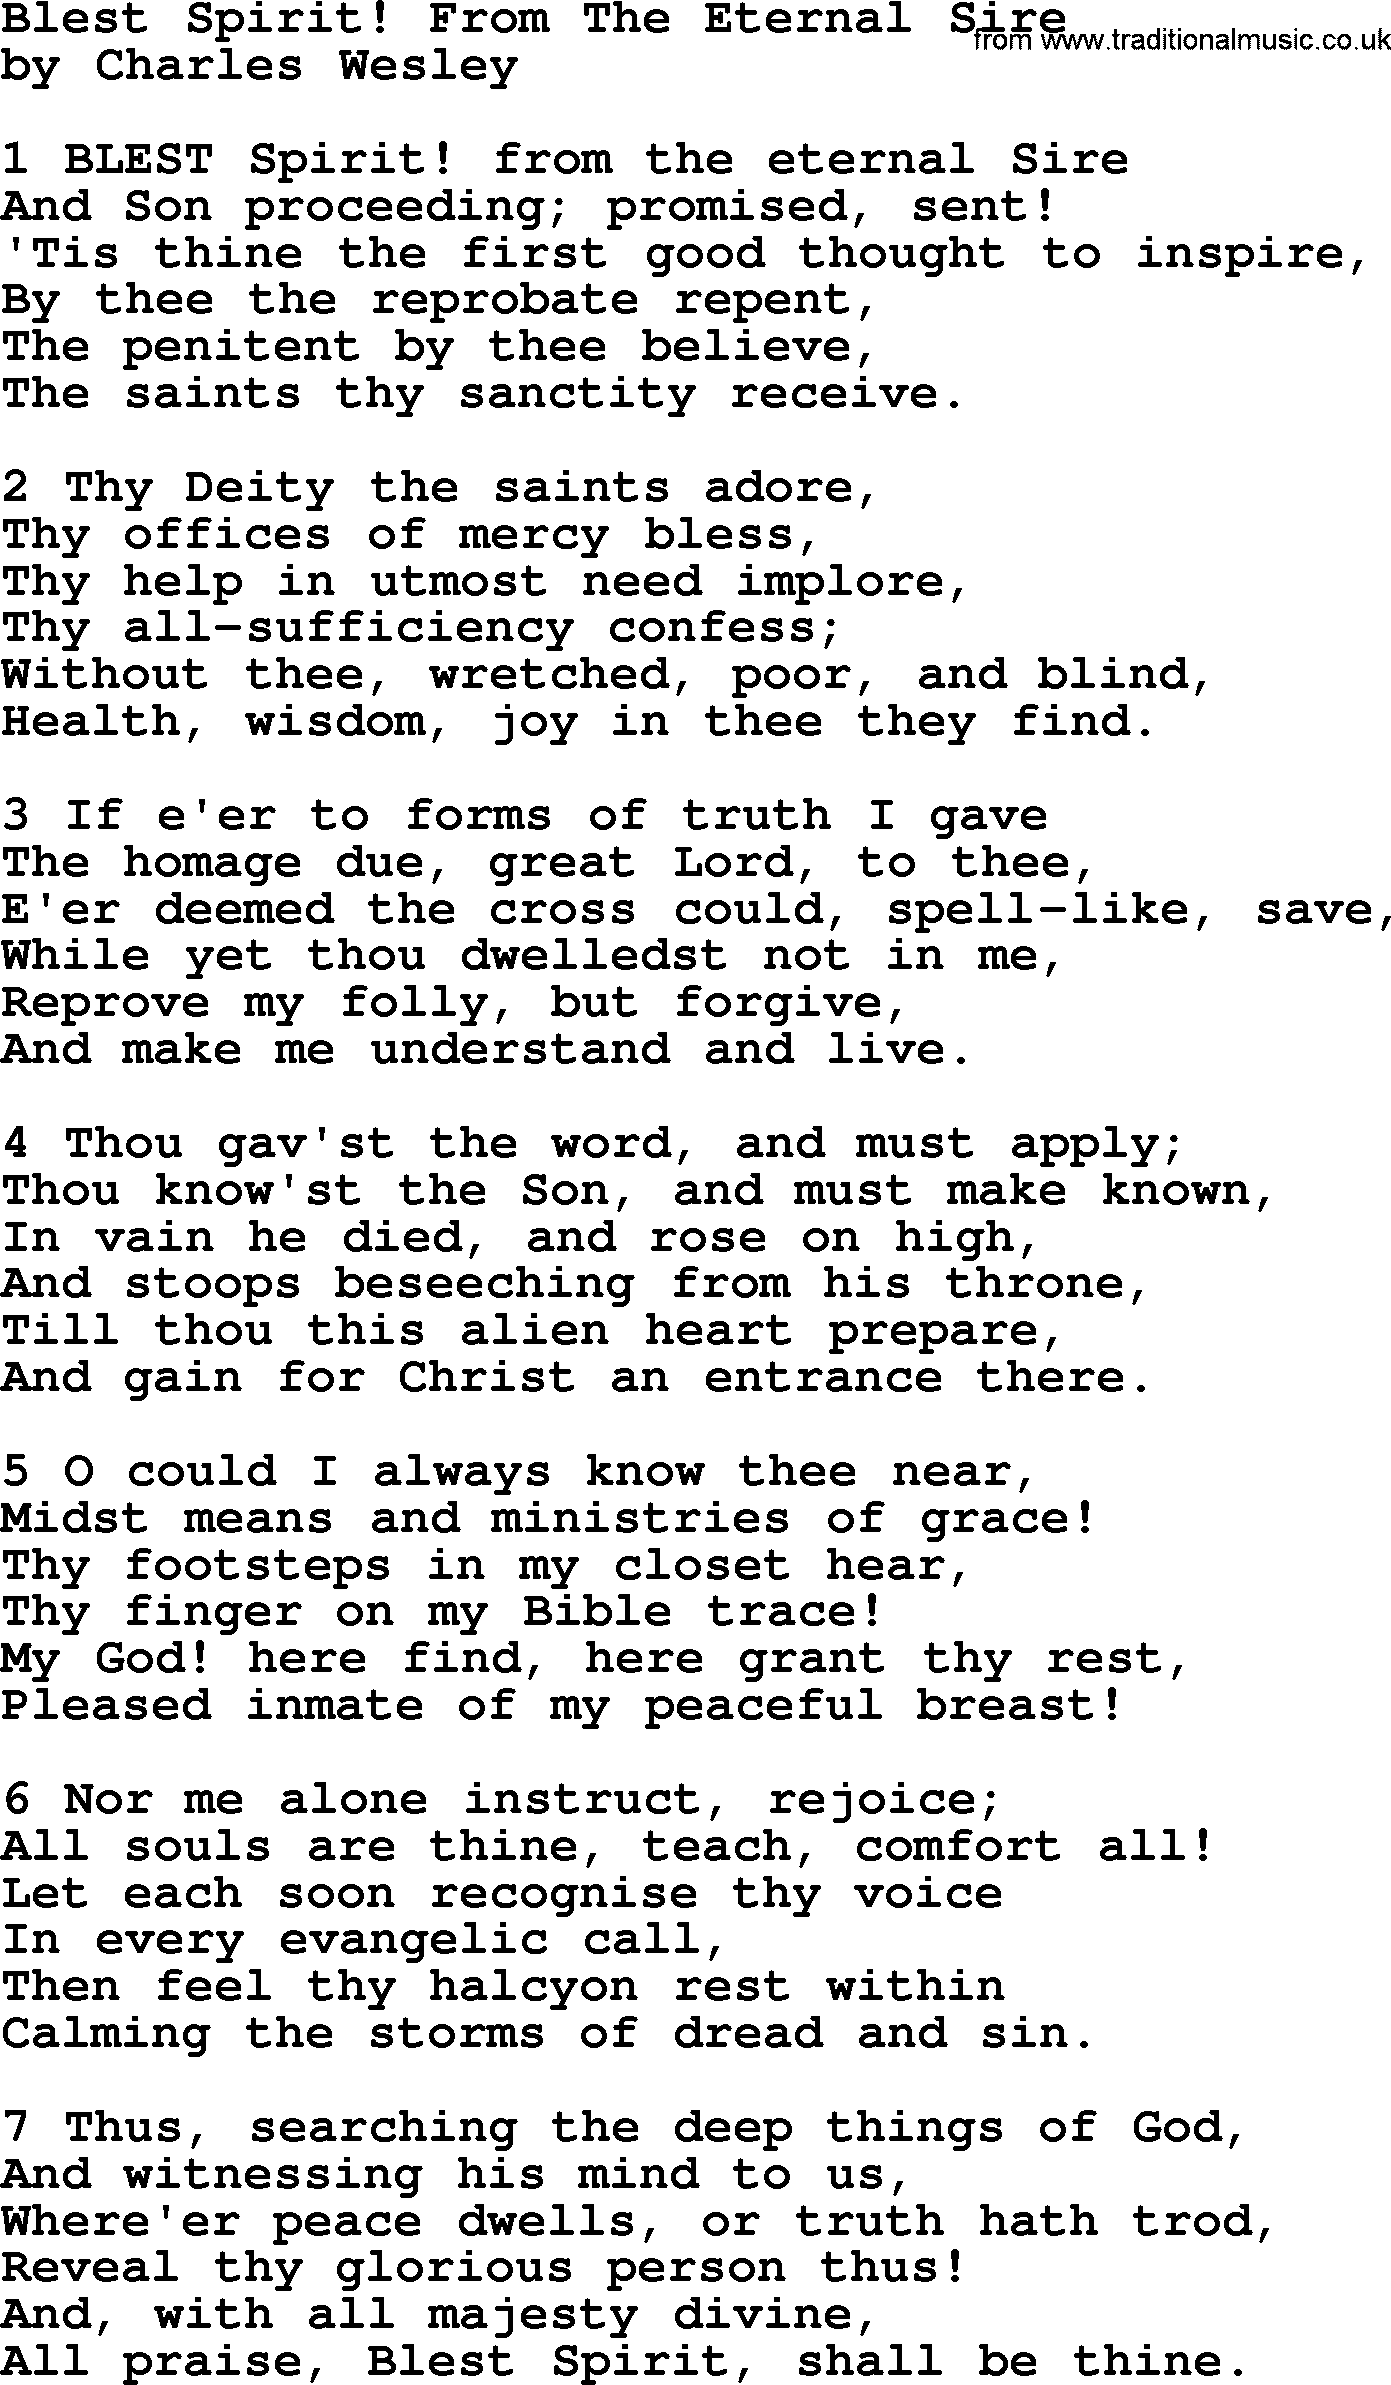 Charles Wesley hymn: Blest Spirit! From The Eternal Sire, lyrics